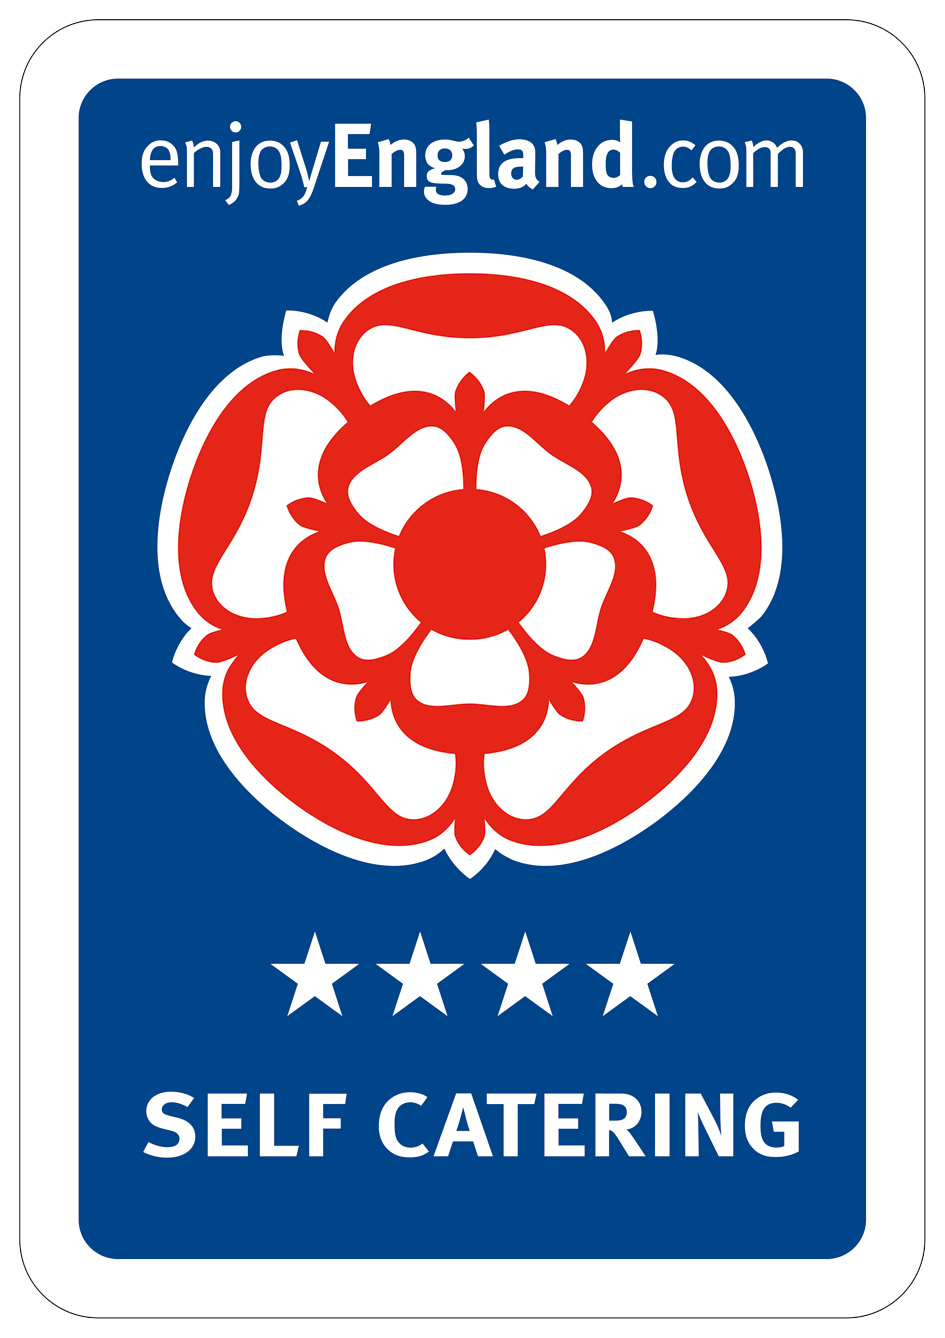 Awarded 4 star grading self catering - enjoyengland.com